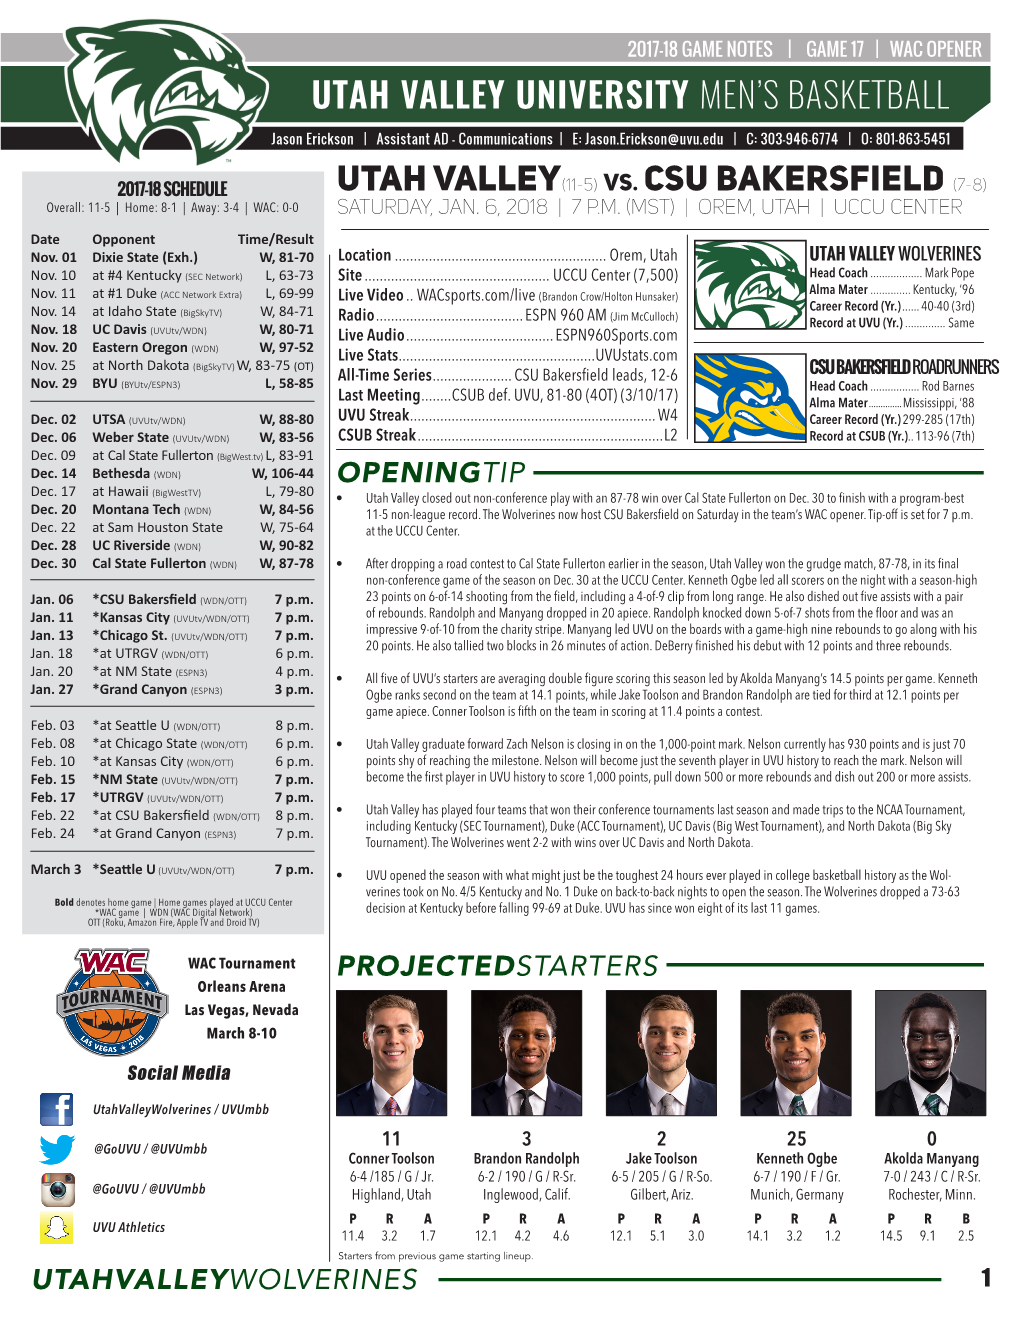 Utah Valley University Men's Basketball Utah Valley(11-5